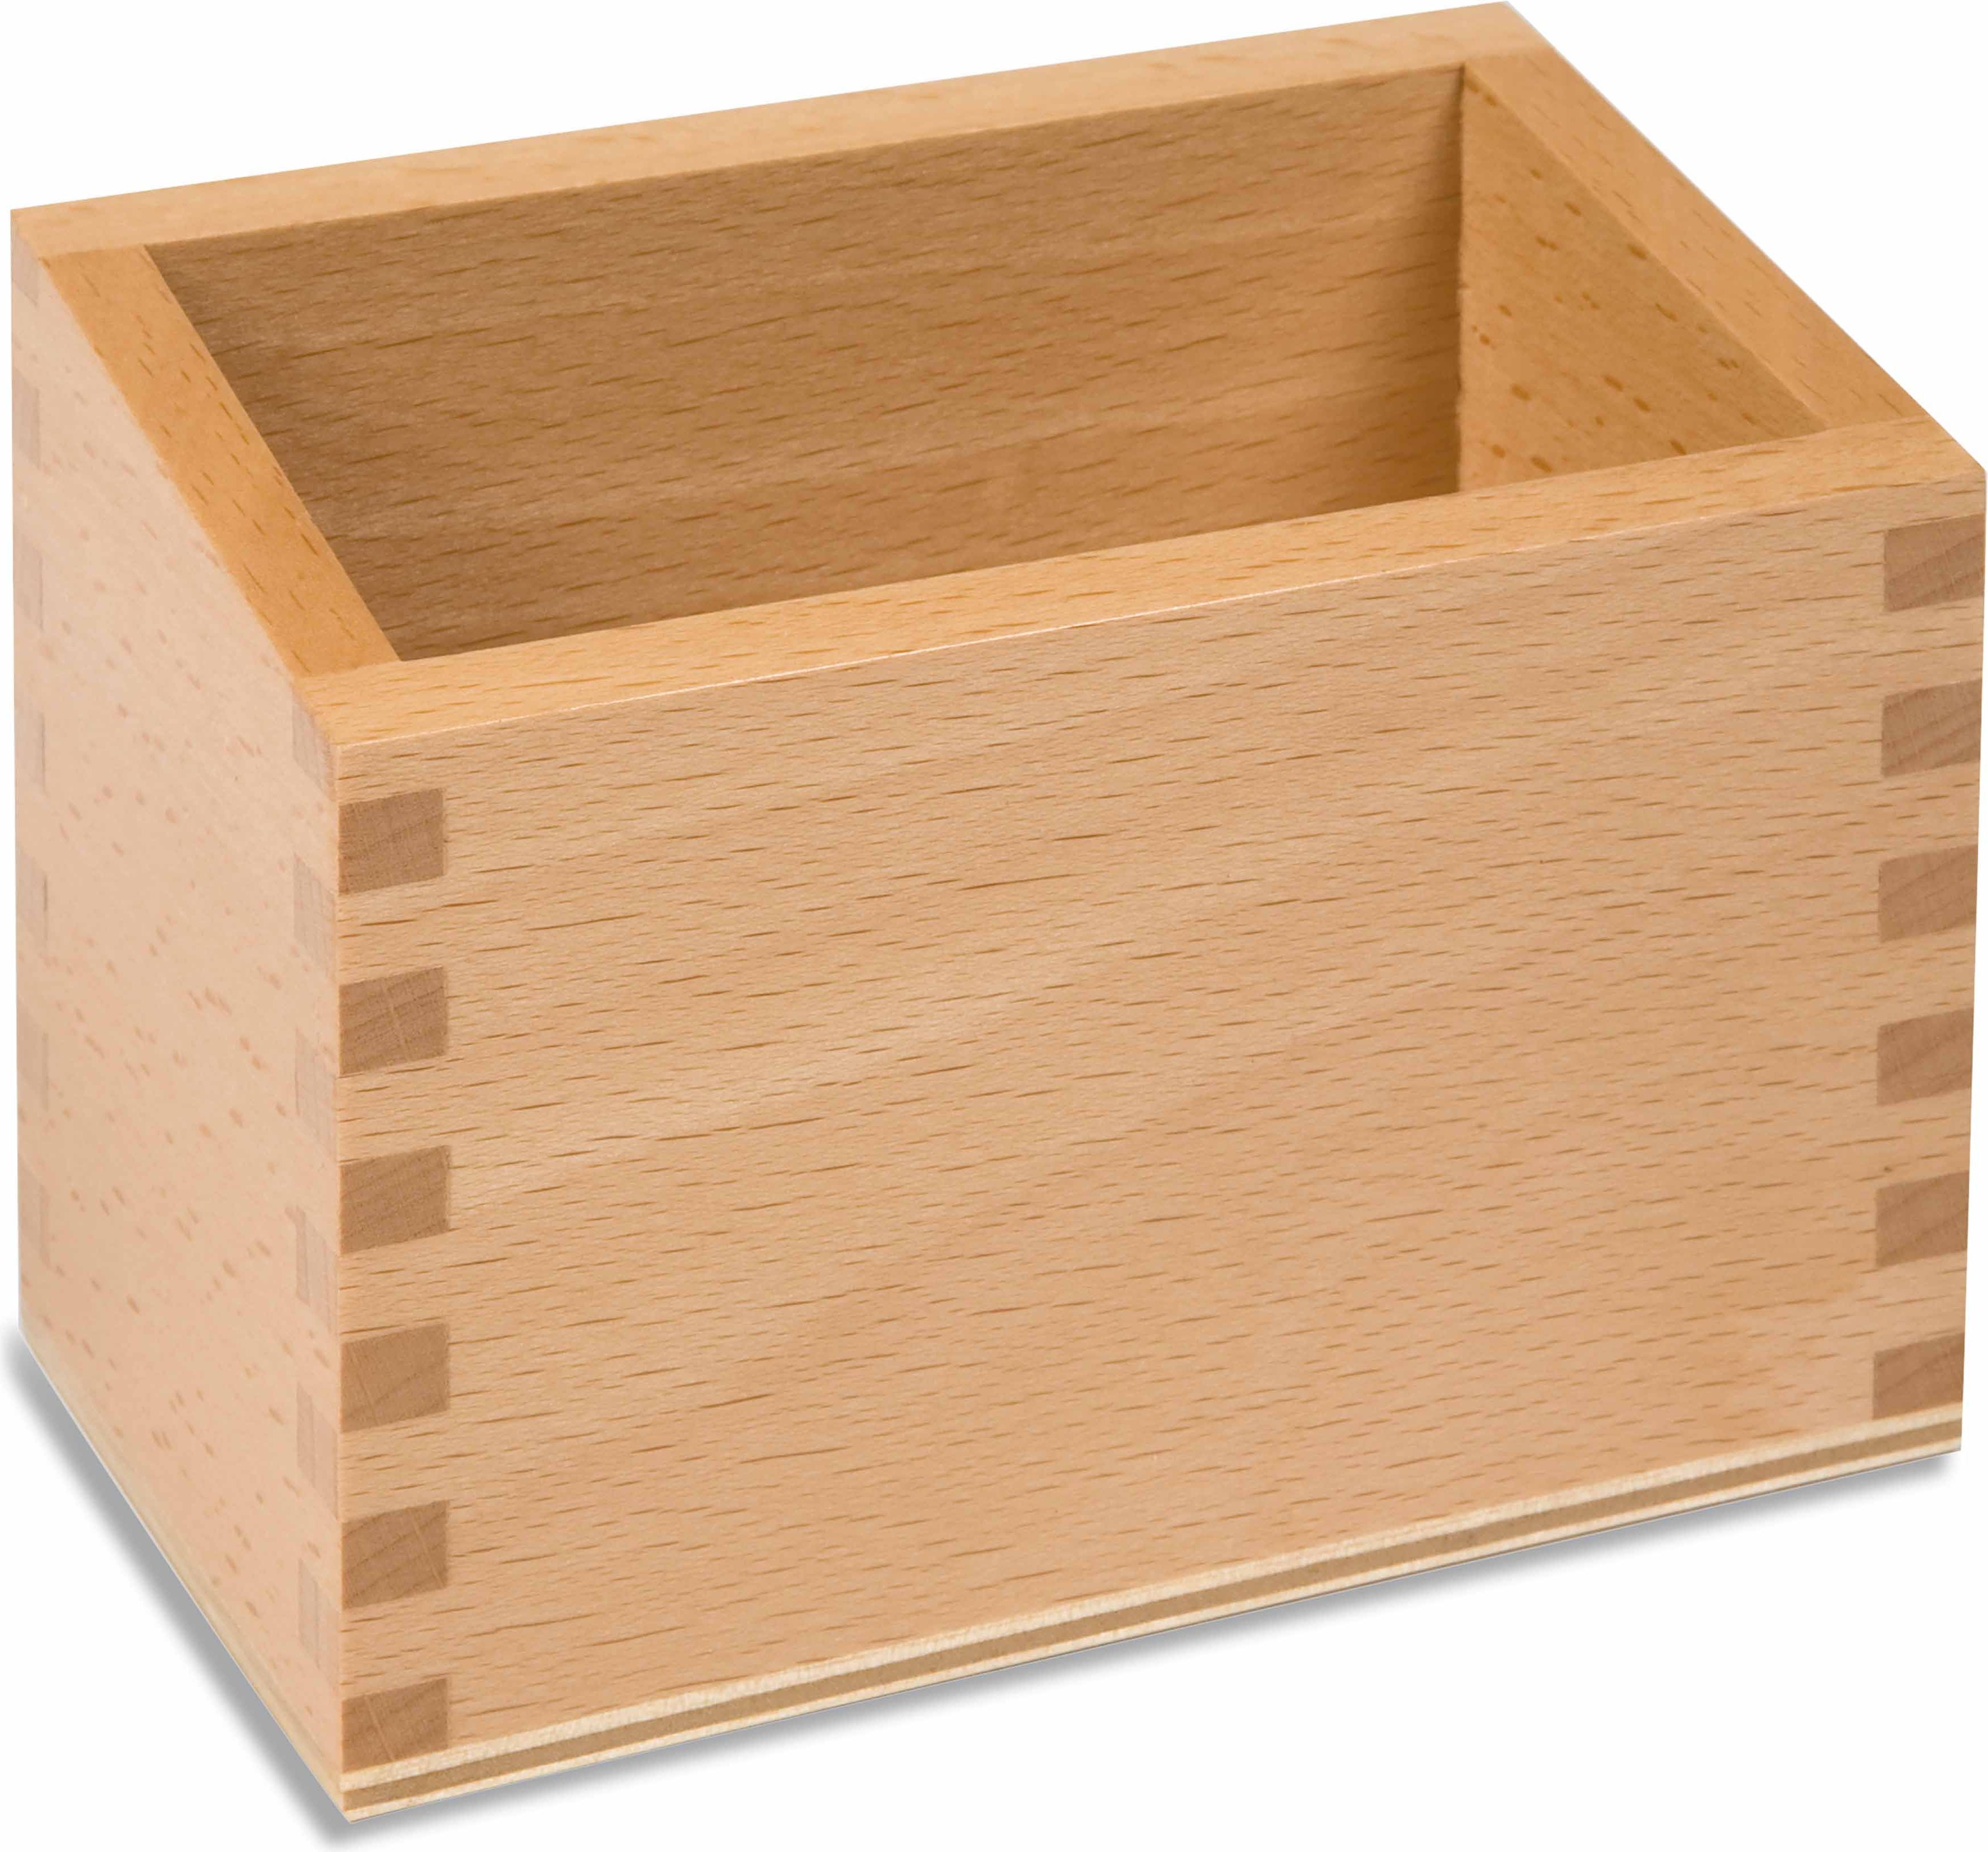 Nienhuis Montessori Písková čísla - Krabička - obrázek 1